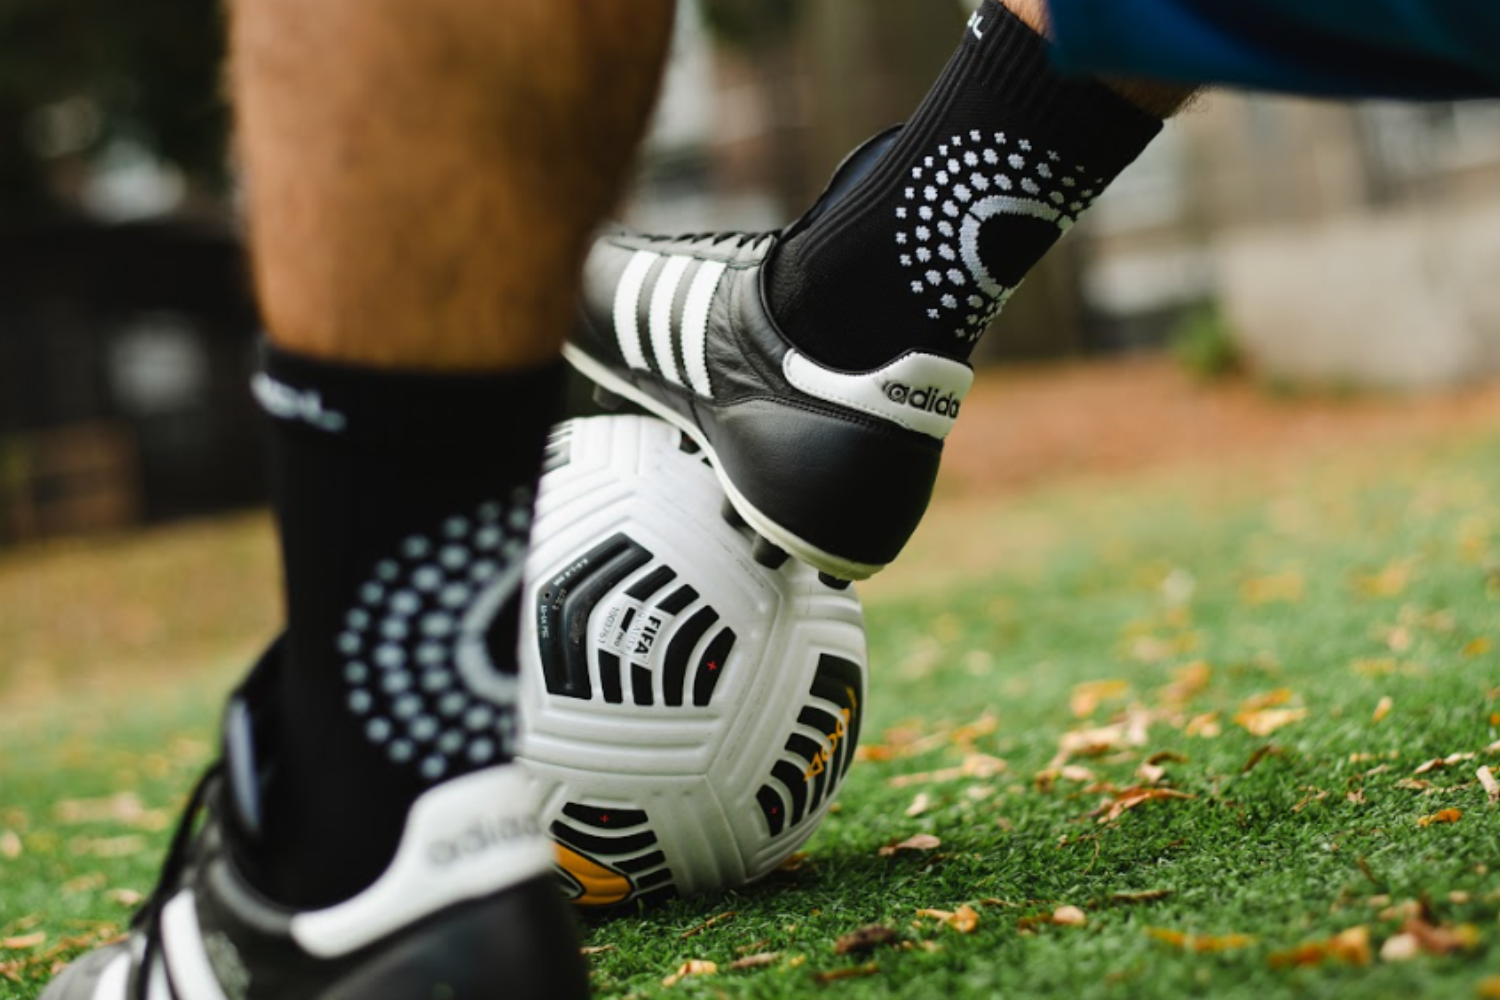 Sports Socks Socks Anti Slip W/Grip Short Socks Men Soccer Football Premium  Sock